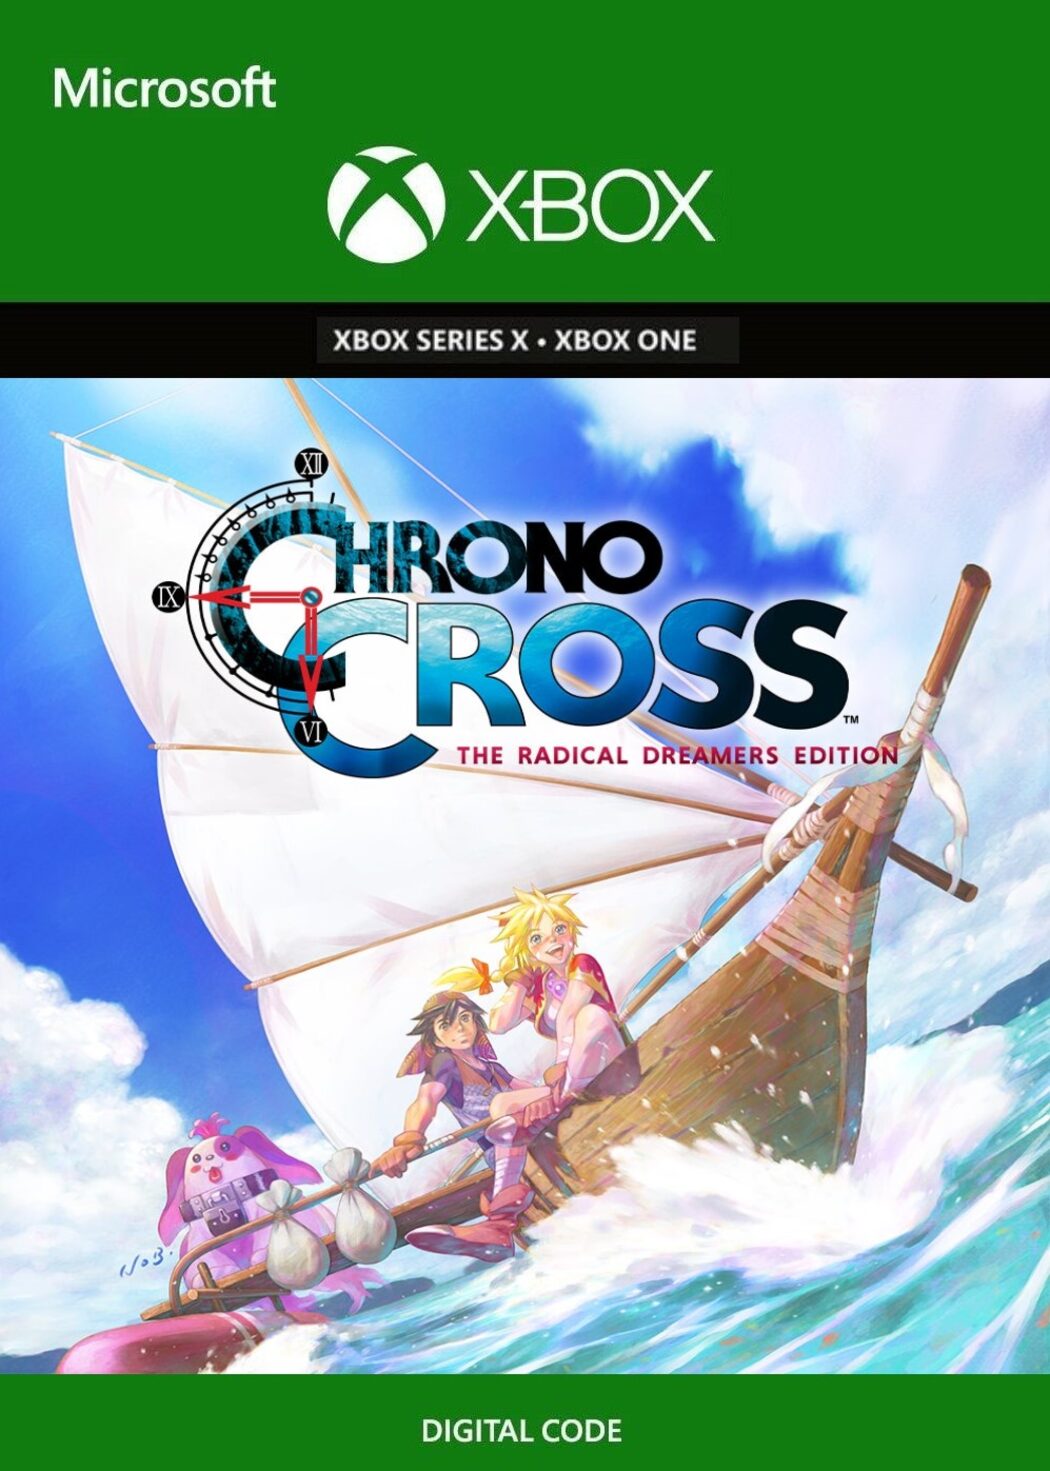 Chrono Cross on X: Chrono Cross: The Radical Dreamers Edition not